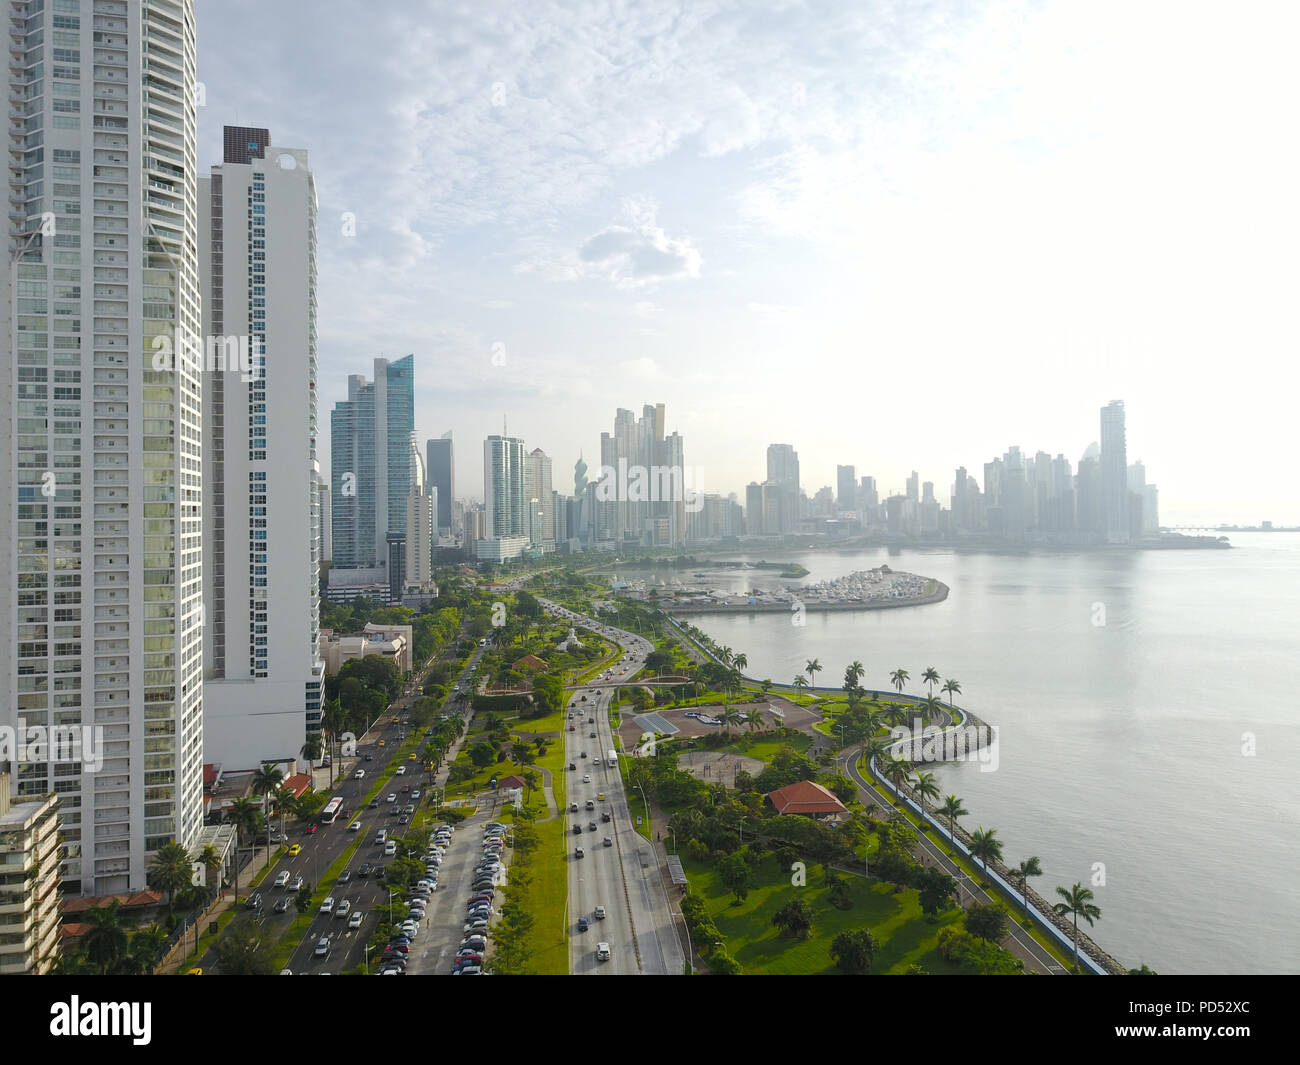 PANAMA CITY, Panama - 14.September 2017: Panama City ist die modernste Stadt in Mittelamerika. Stockfoto